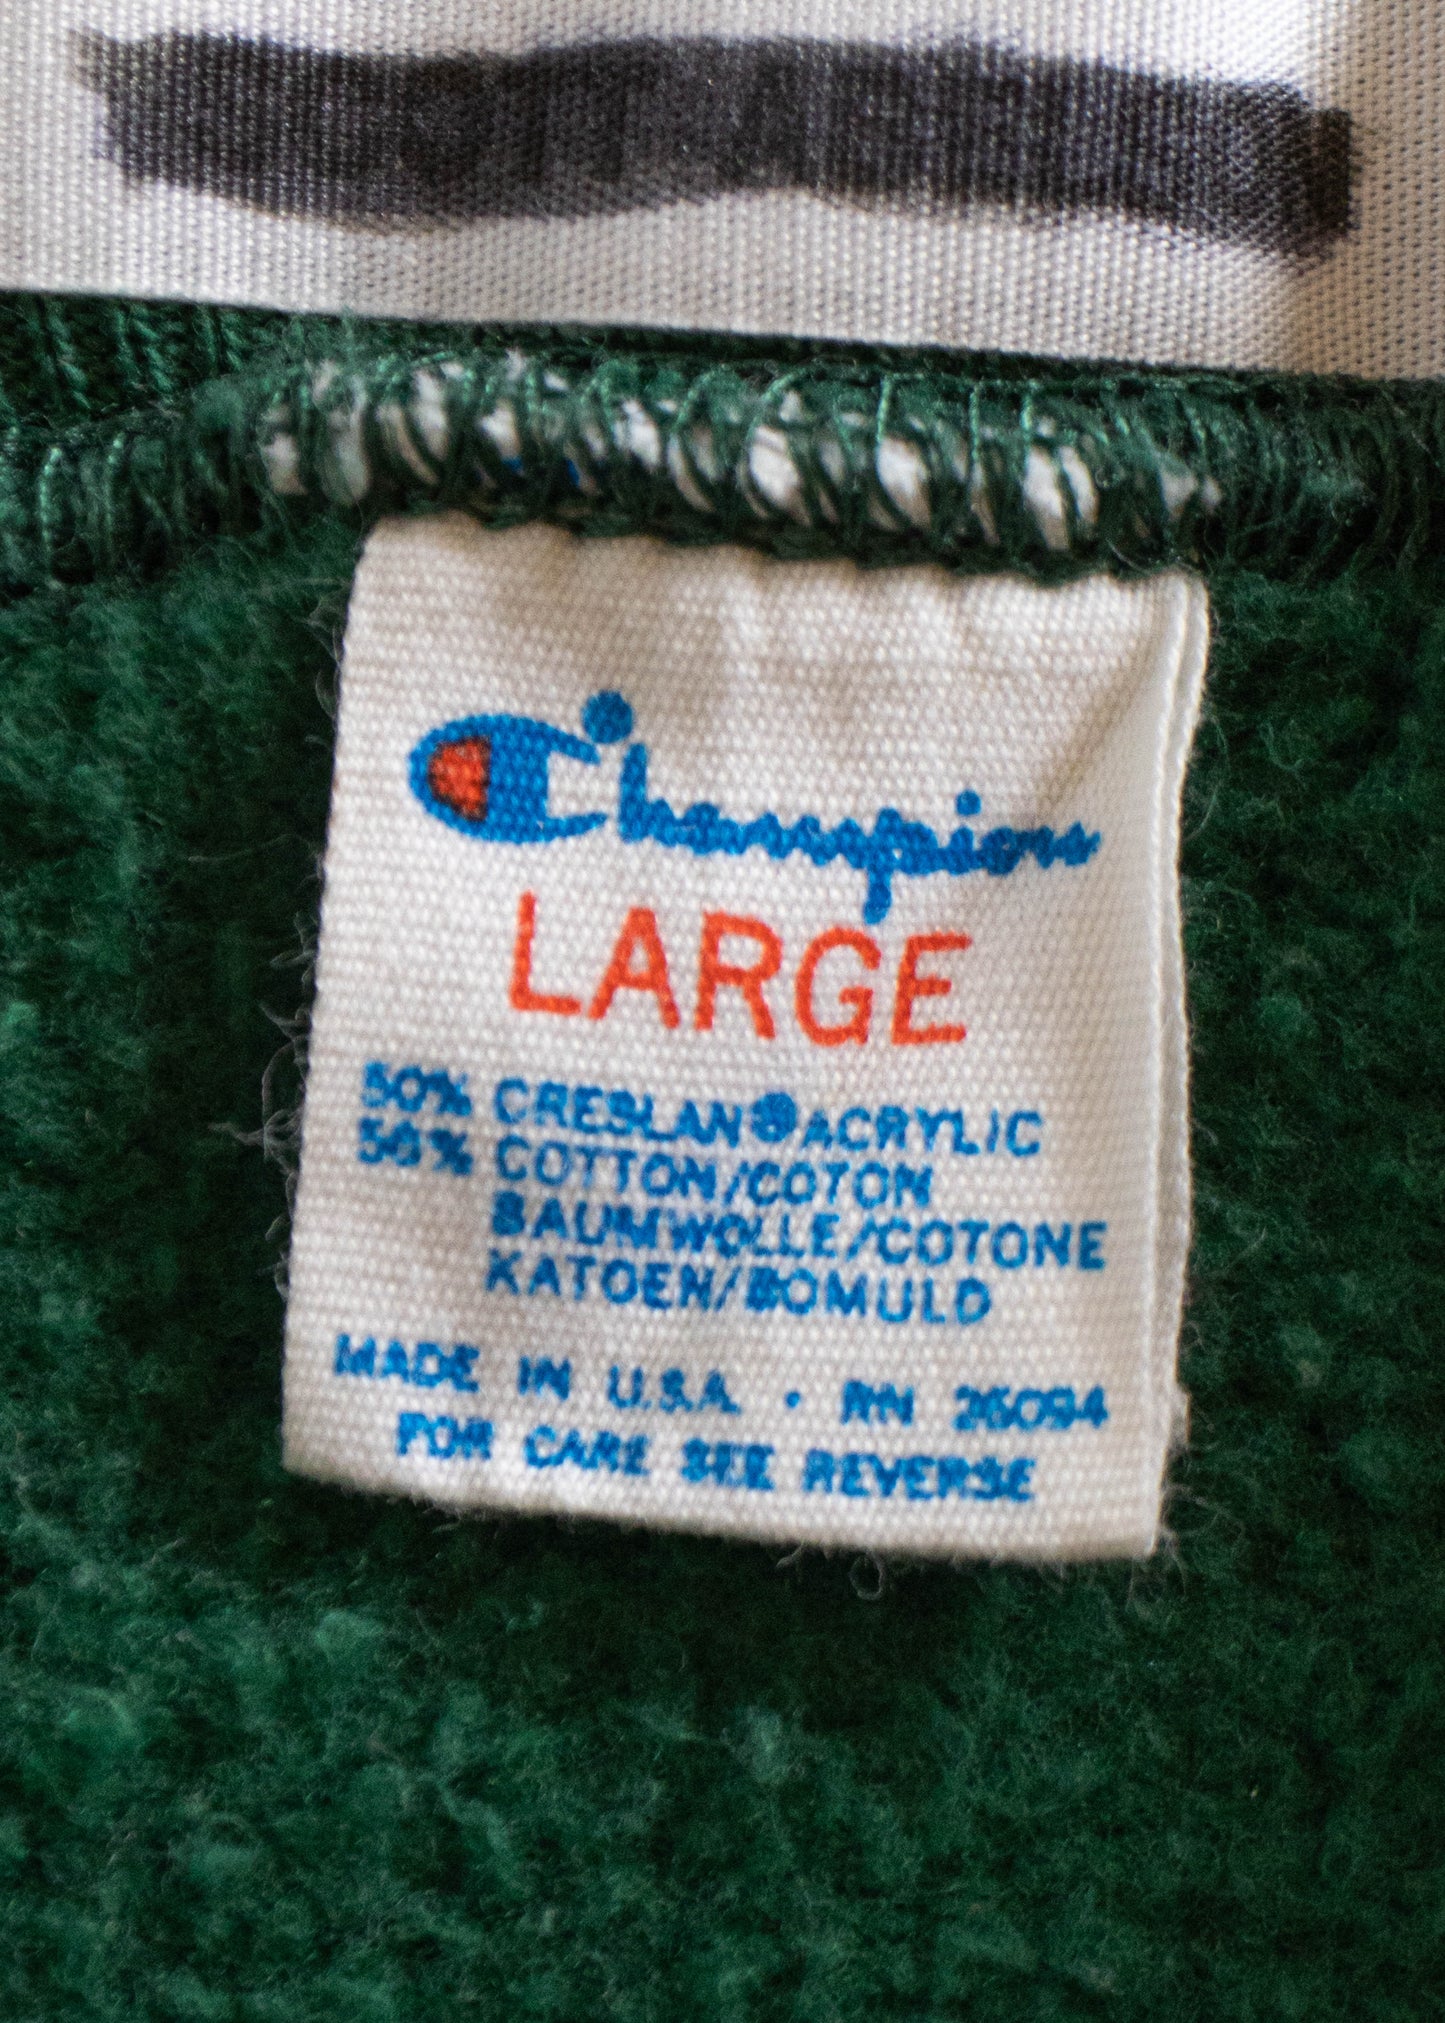 1980s Champion Echo Lake Flocked Letter Raglan Sweatshirt Size M/L